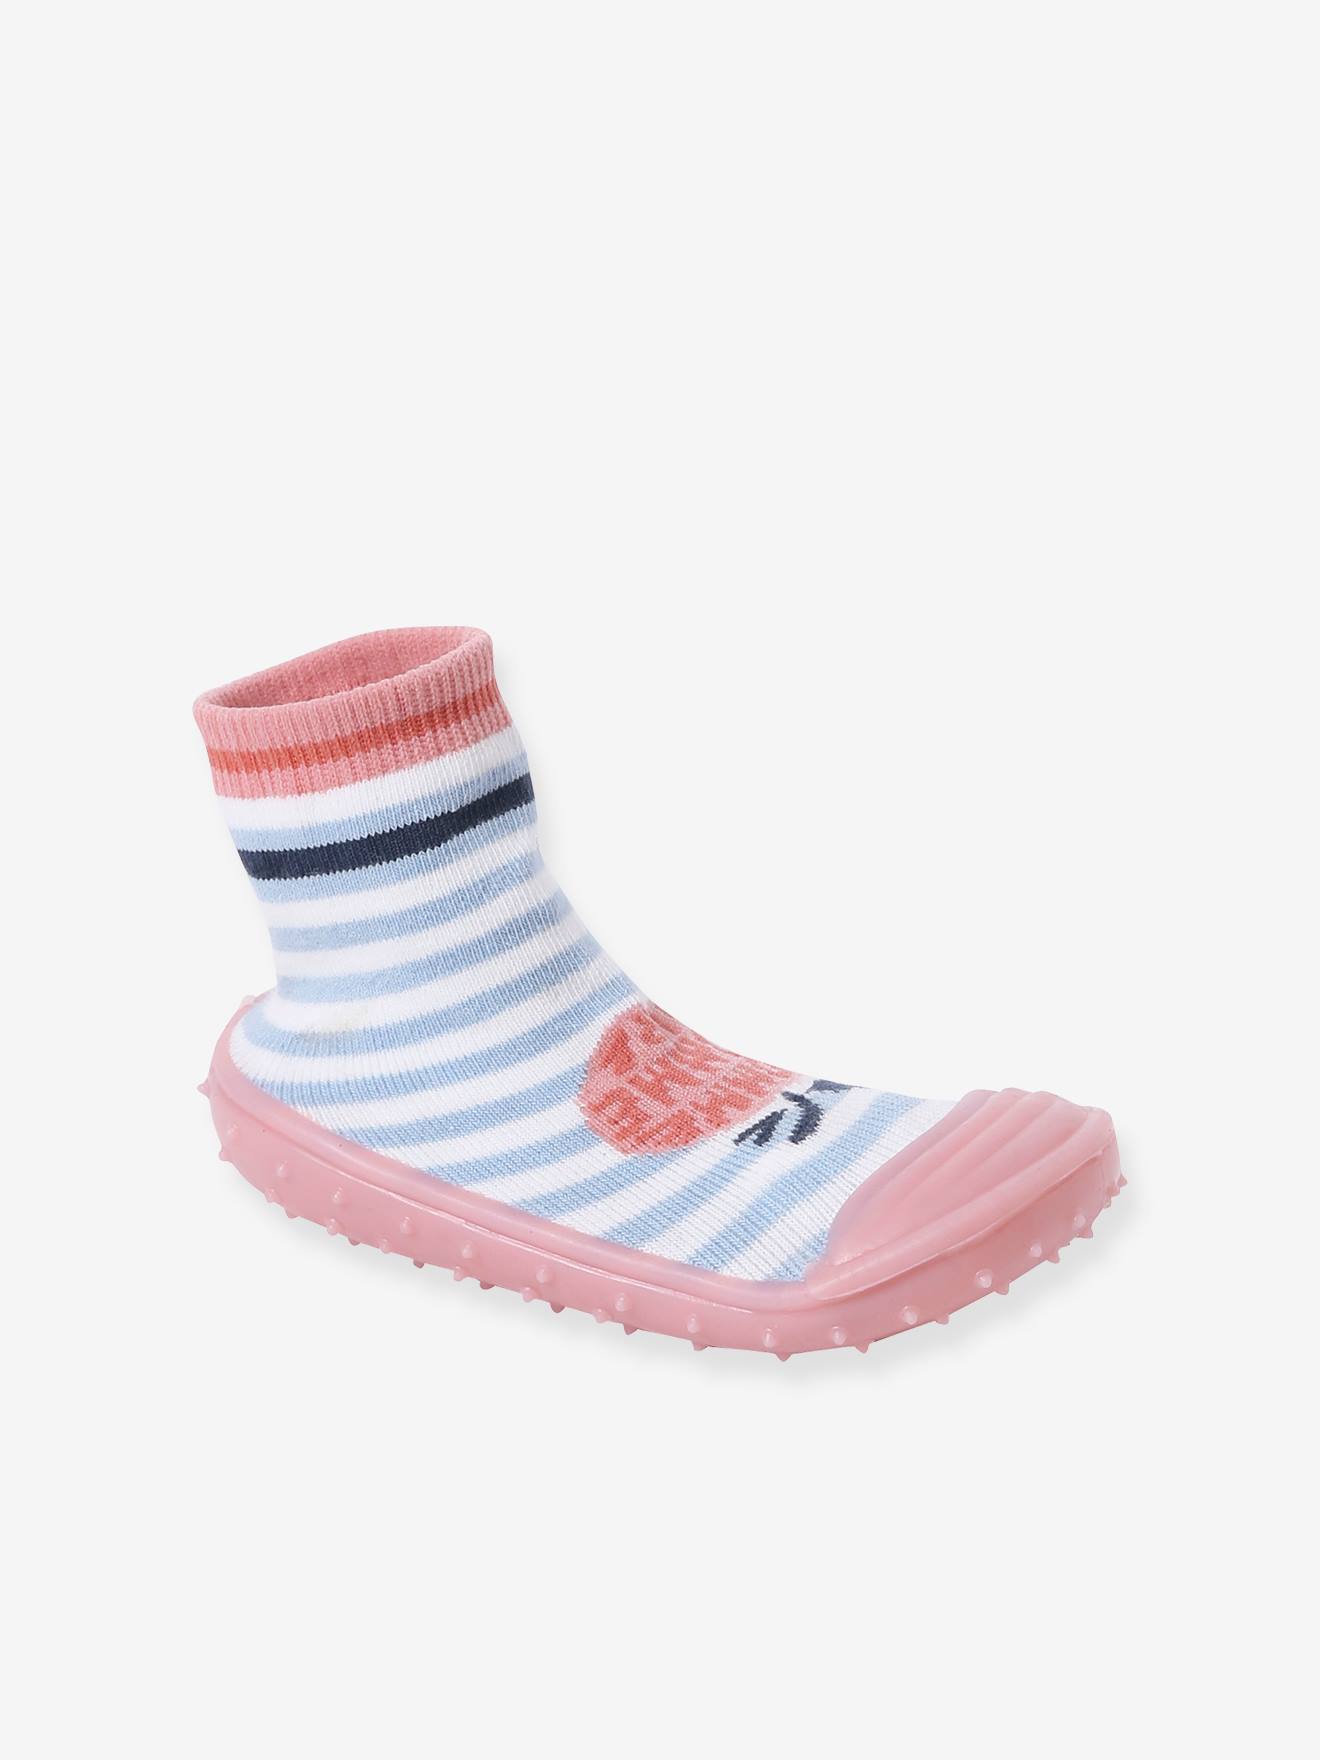 Kids Personalised Grey Fairisle Slipper Socks | TeddyT's